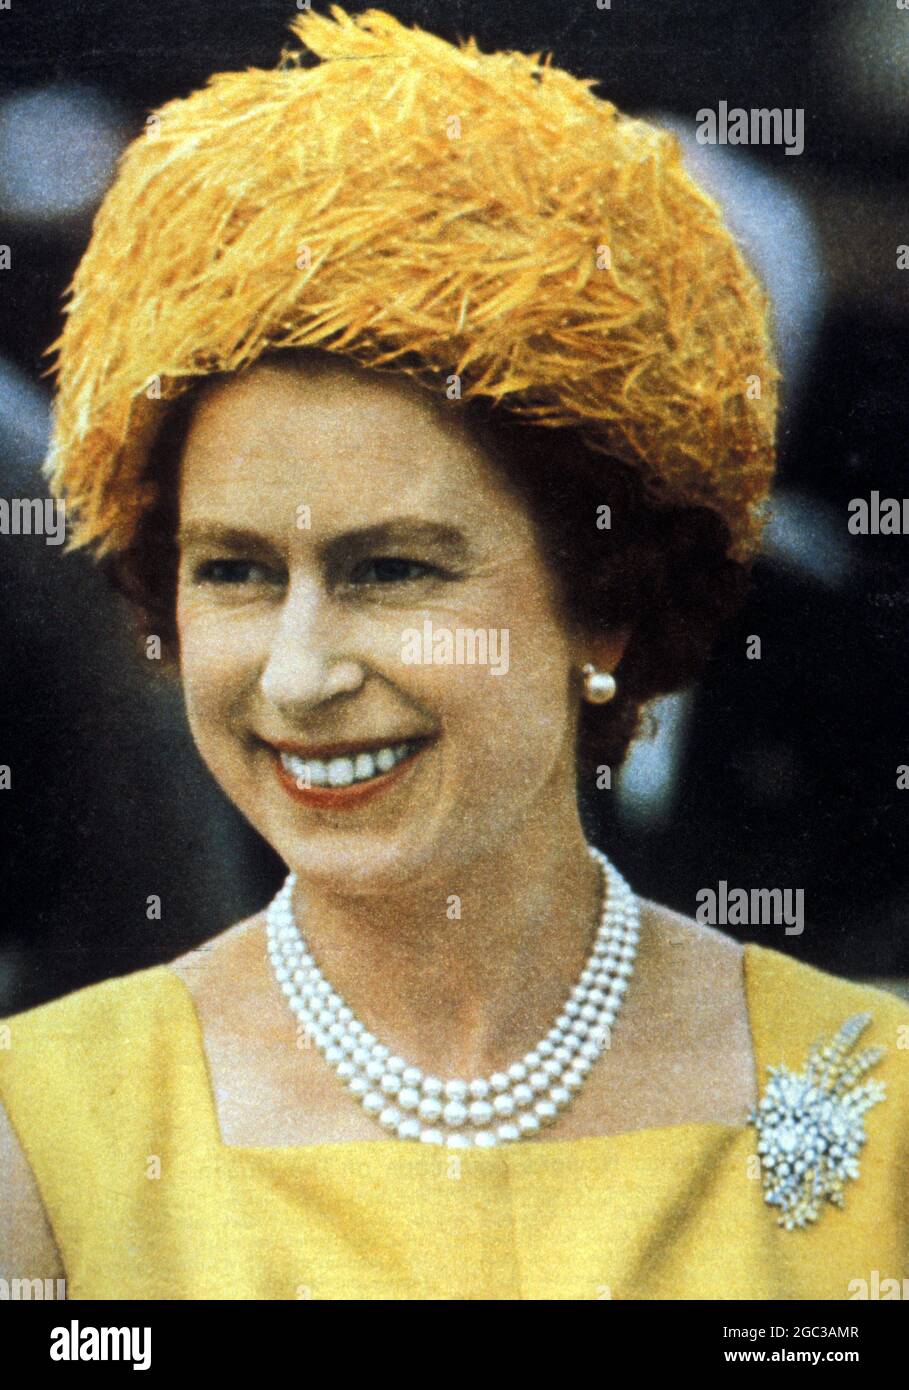 Königin Elizabeth II. (Elizabeth Alexandra Mary Windsor geboren am 21. April 1926) aufgenommen 1966 in Westindien - ©TopFoto Stockfoto